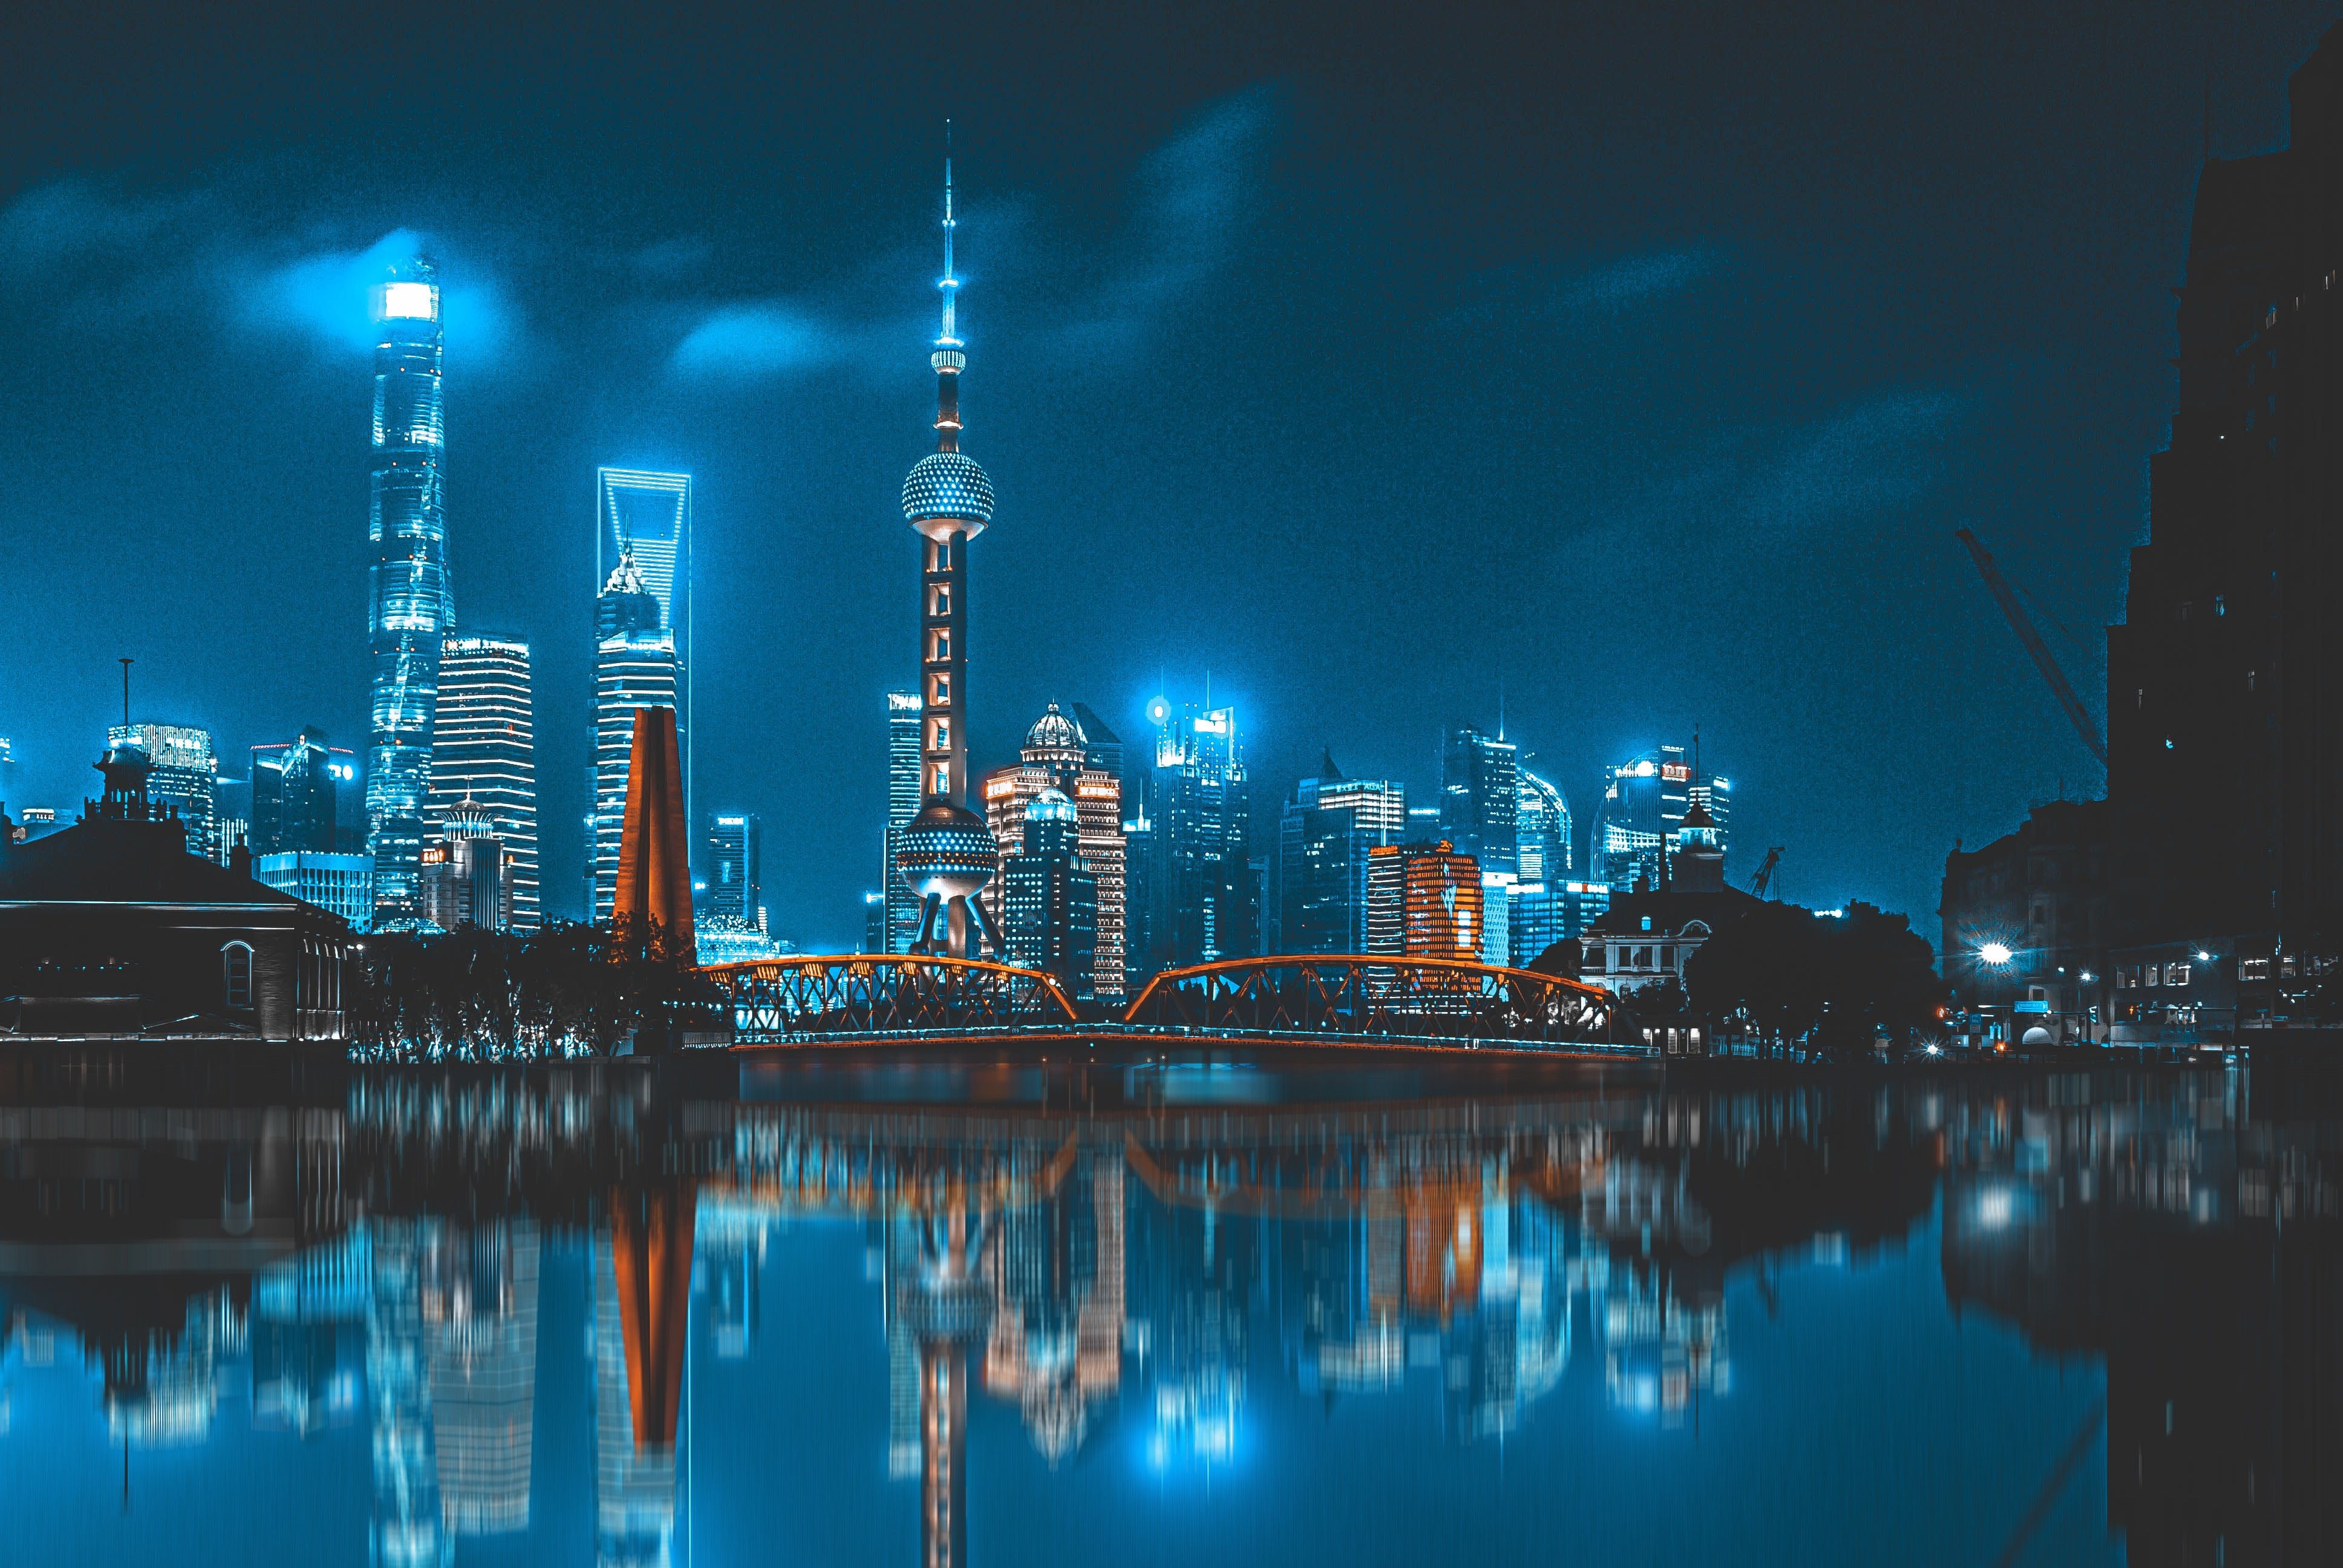 Shanghai Tower in China at night 